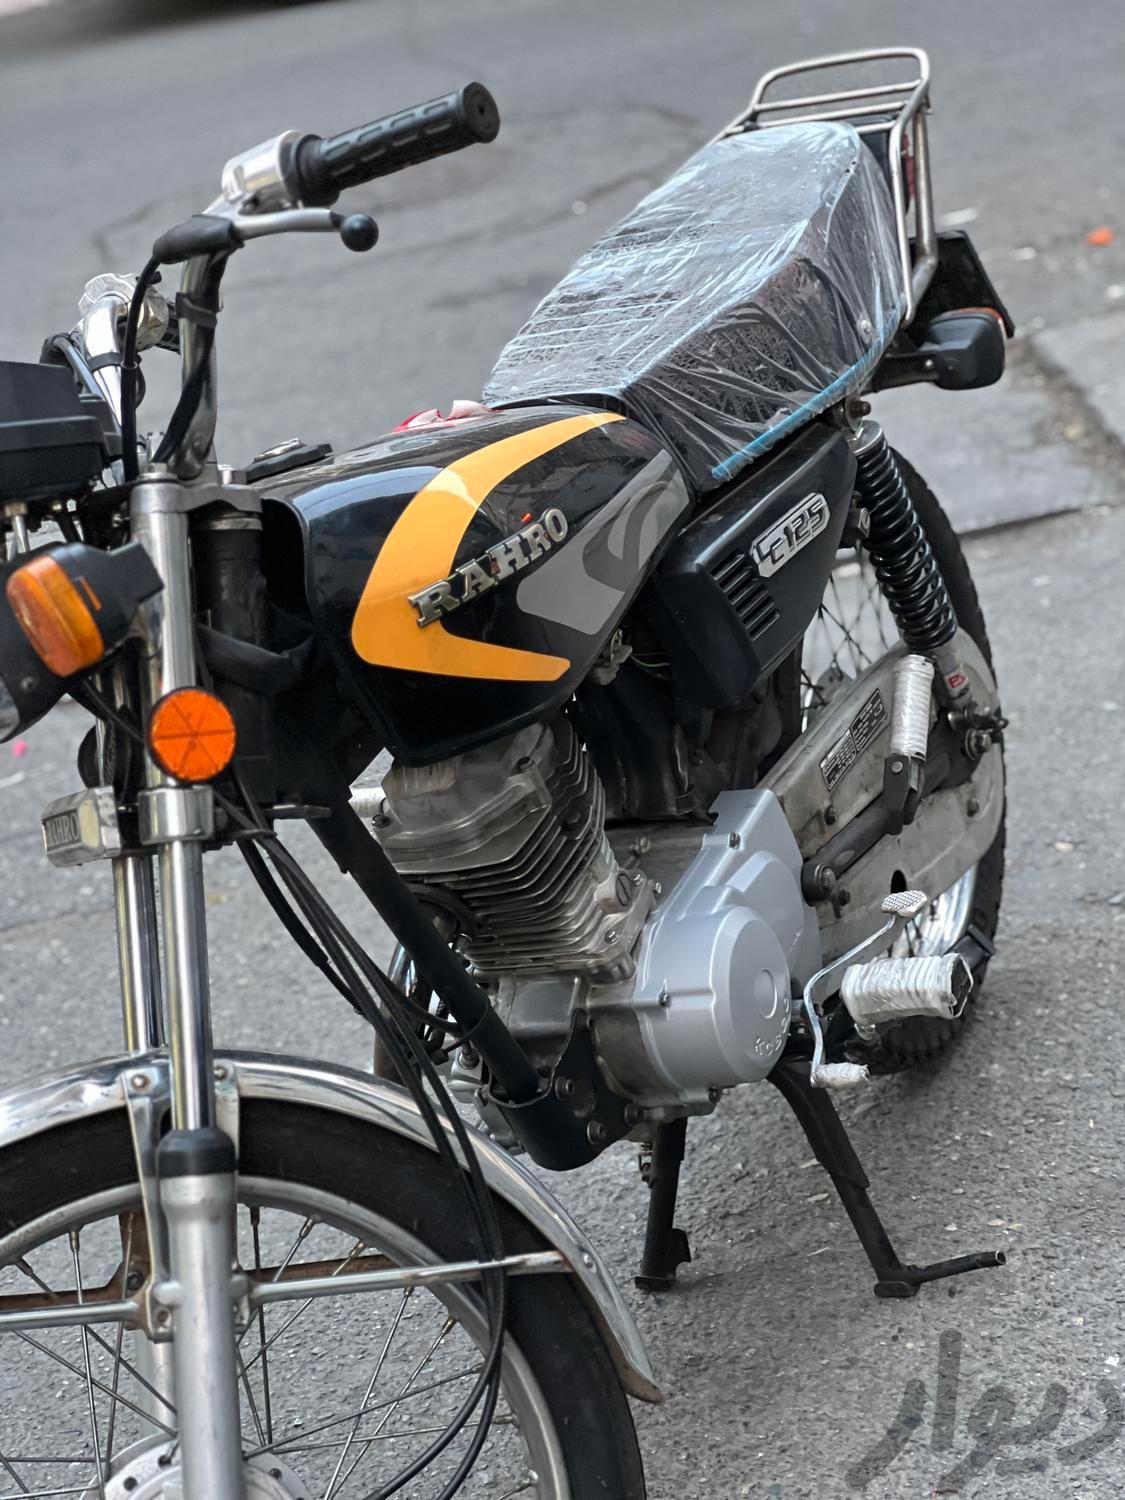 هوندا رهرو مدل ۹۱|موتورسیکلت|تهران, مقدم|دیوار